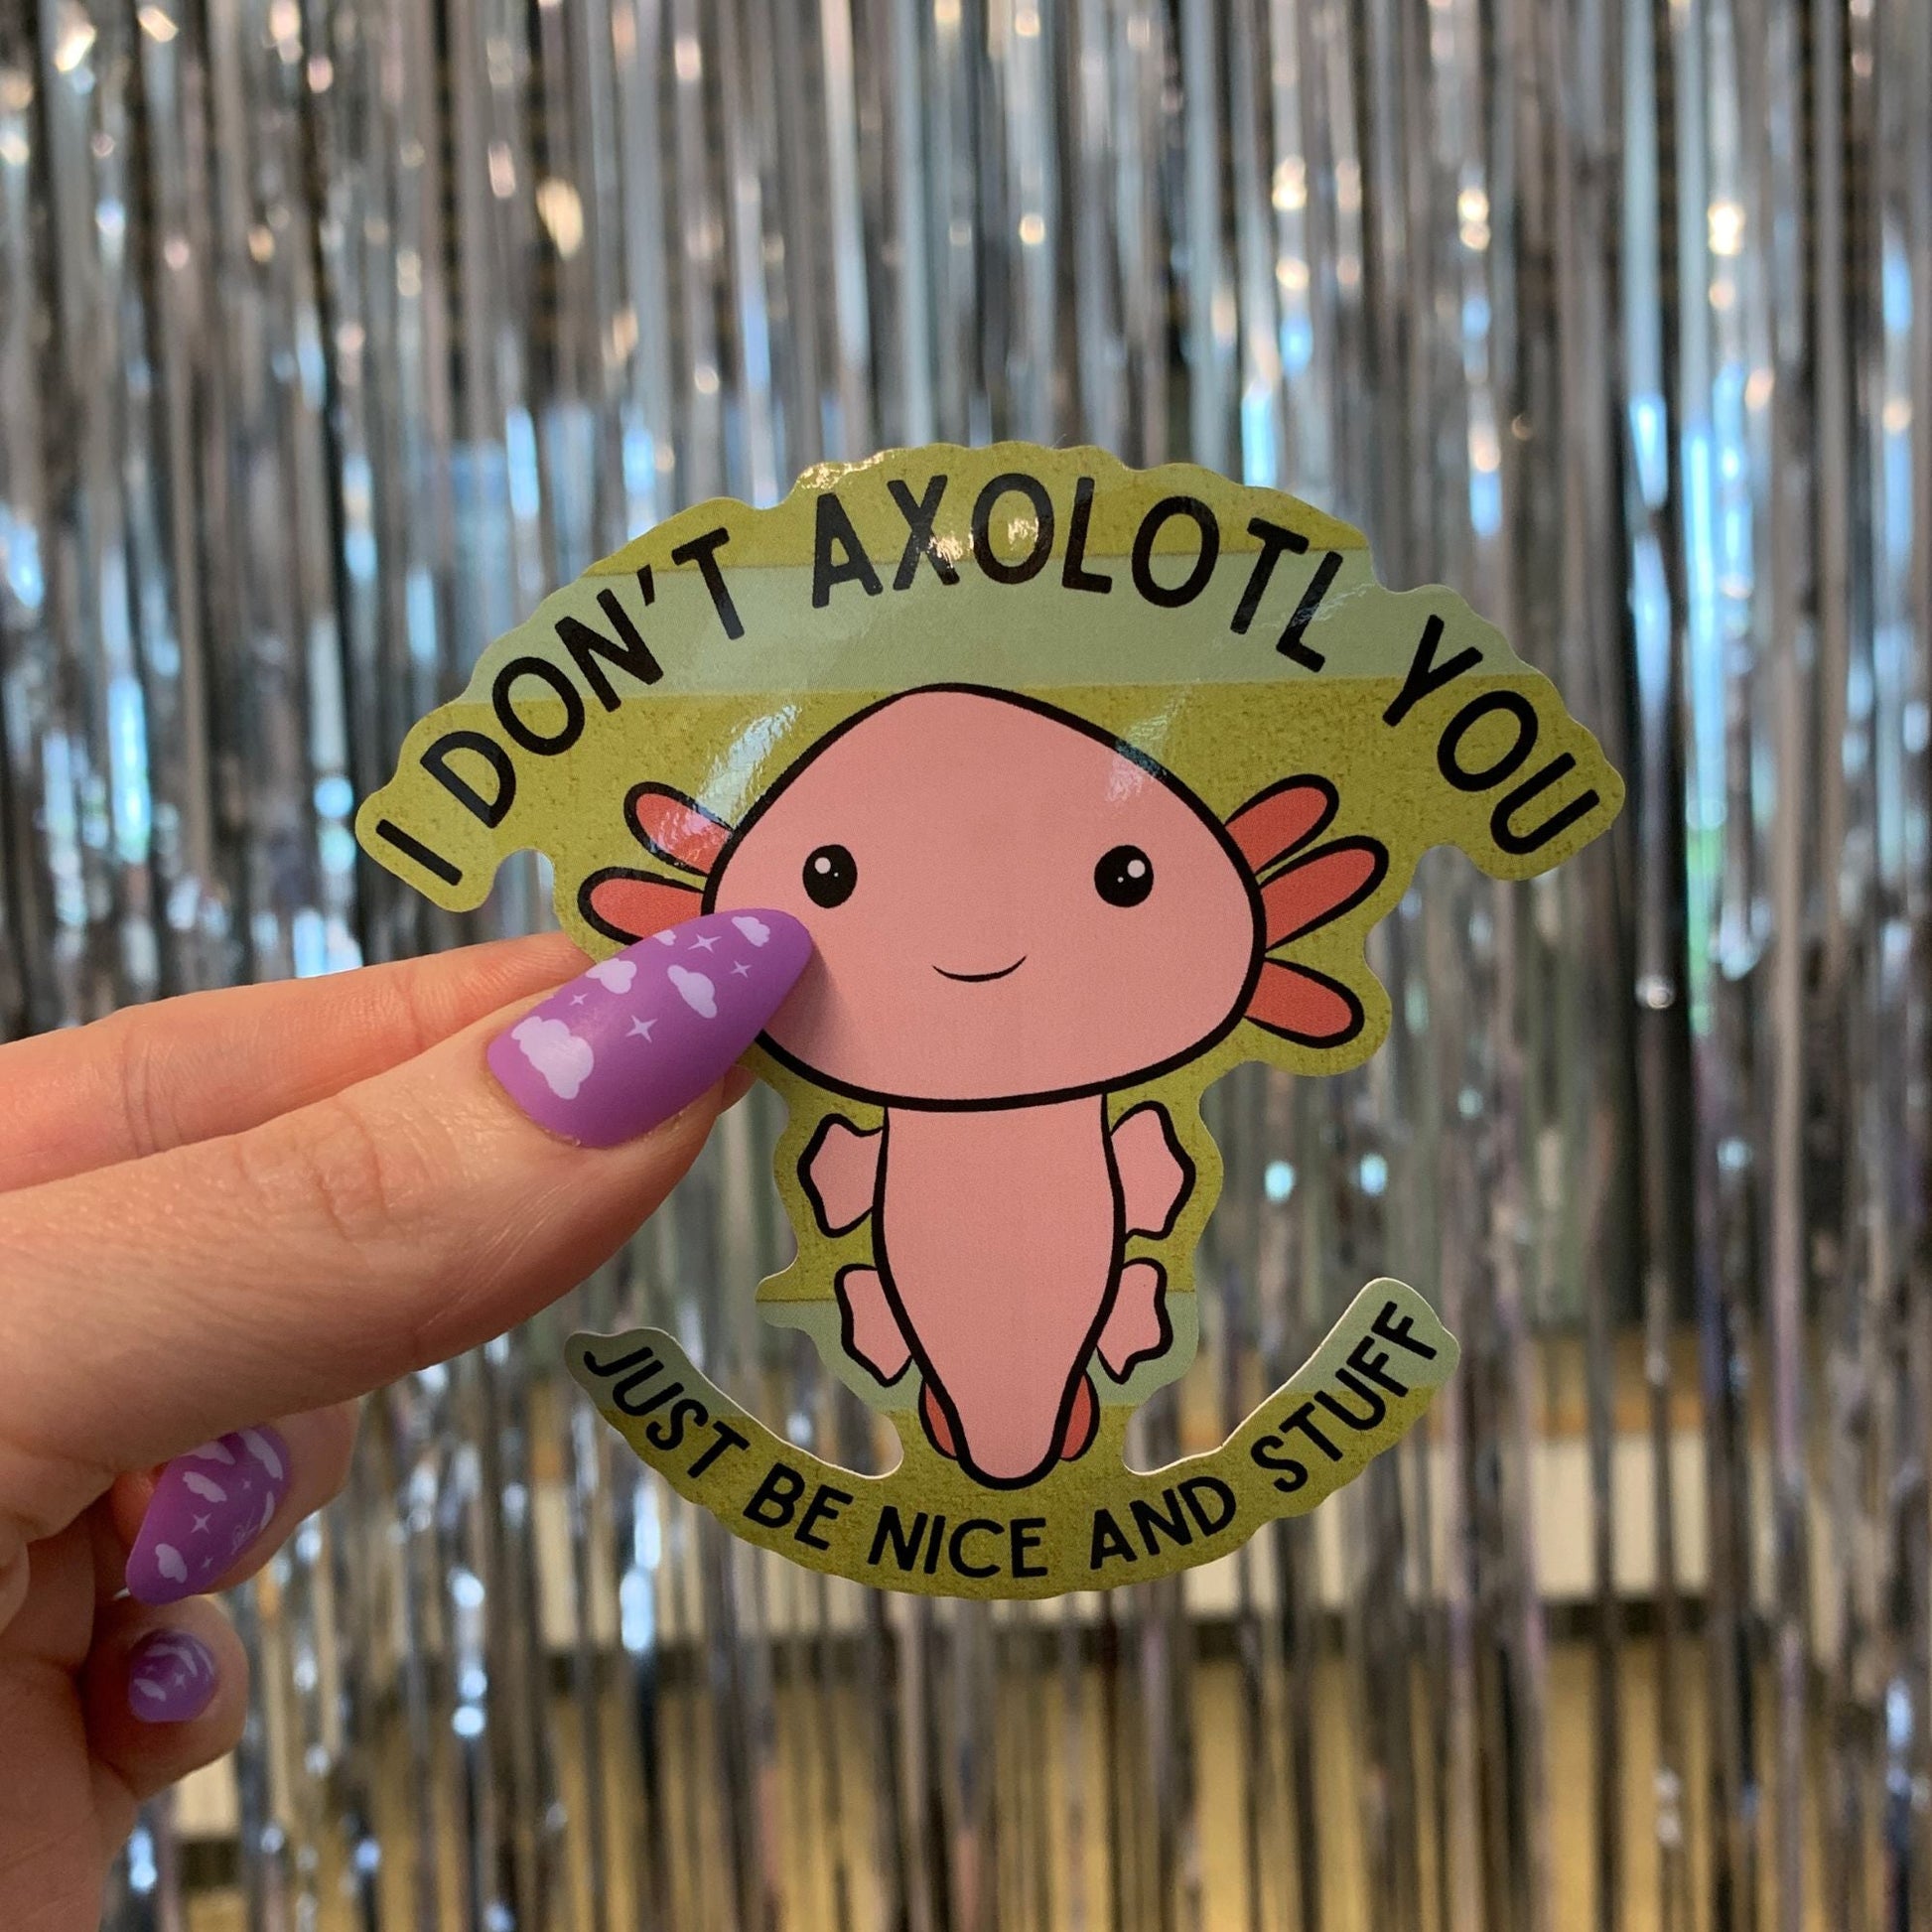 I Don't Axolotl You Sticker | Vinyl Die Cut Decal